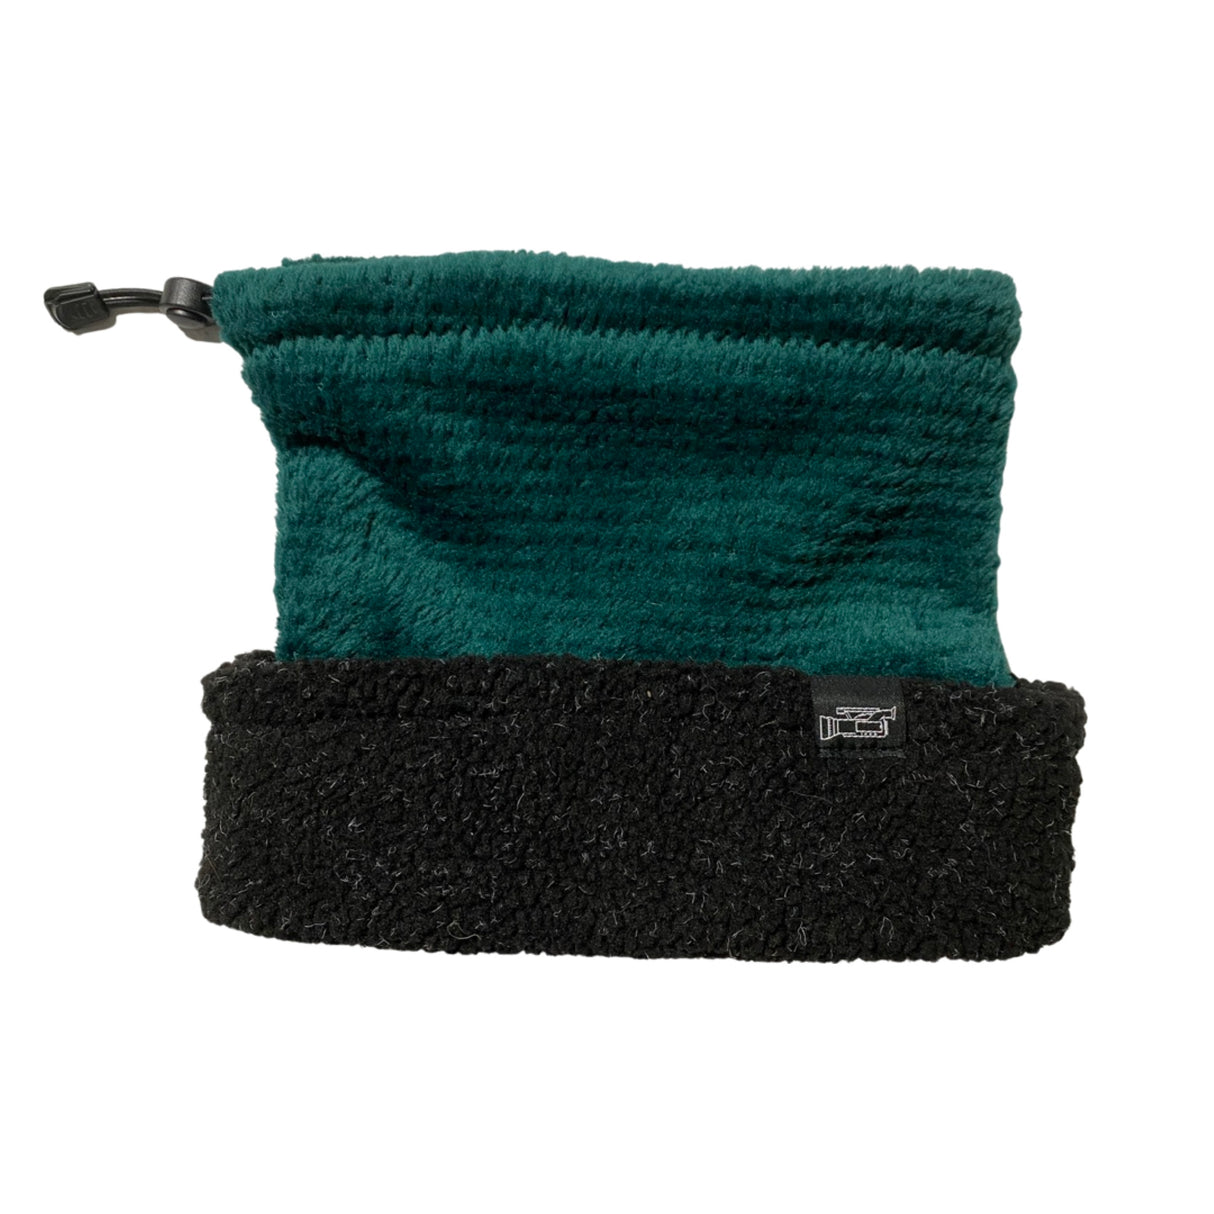 Neon Fleece Black // Stitched Sherpa Hat